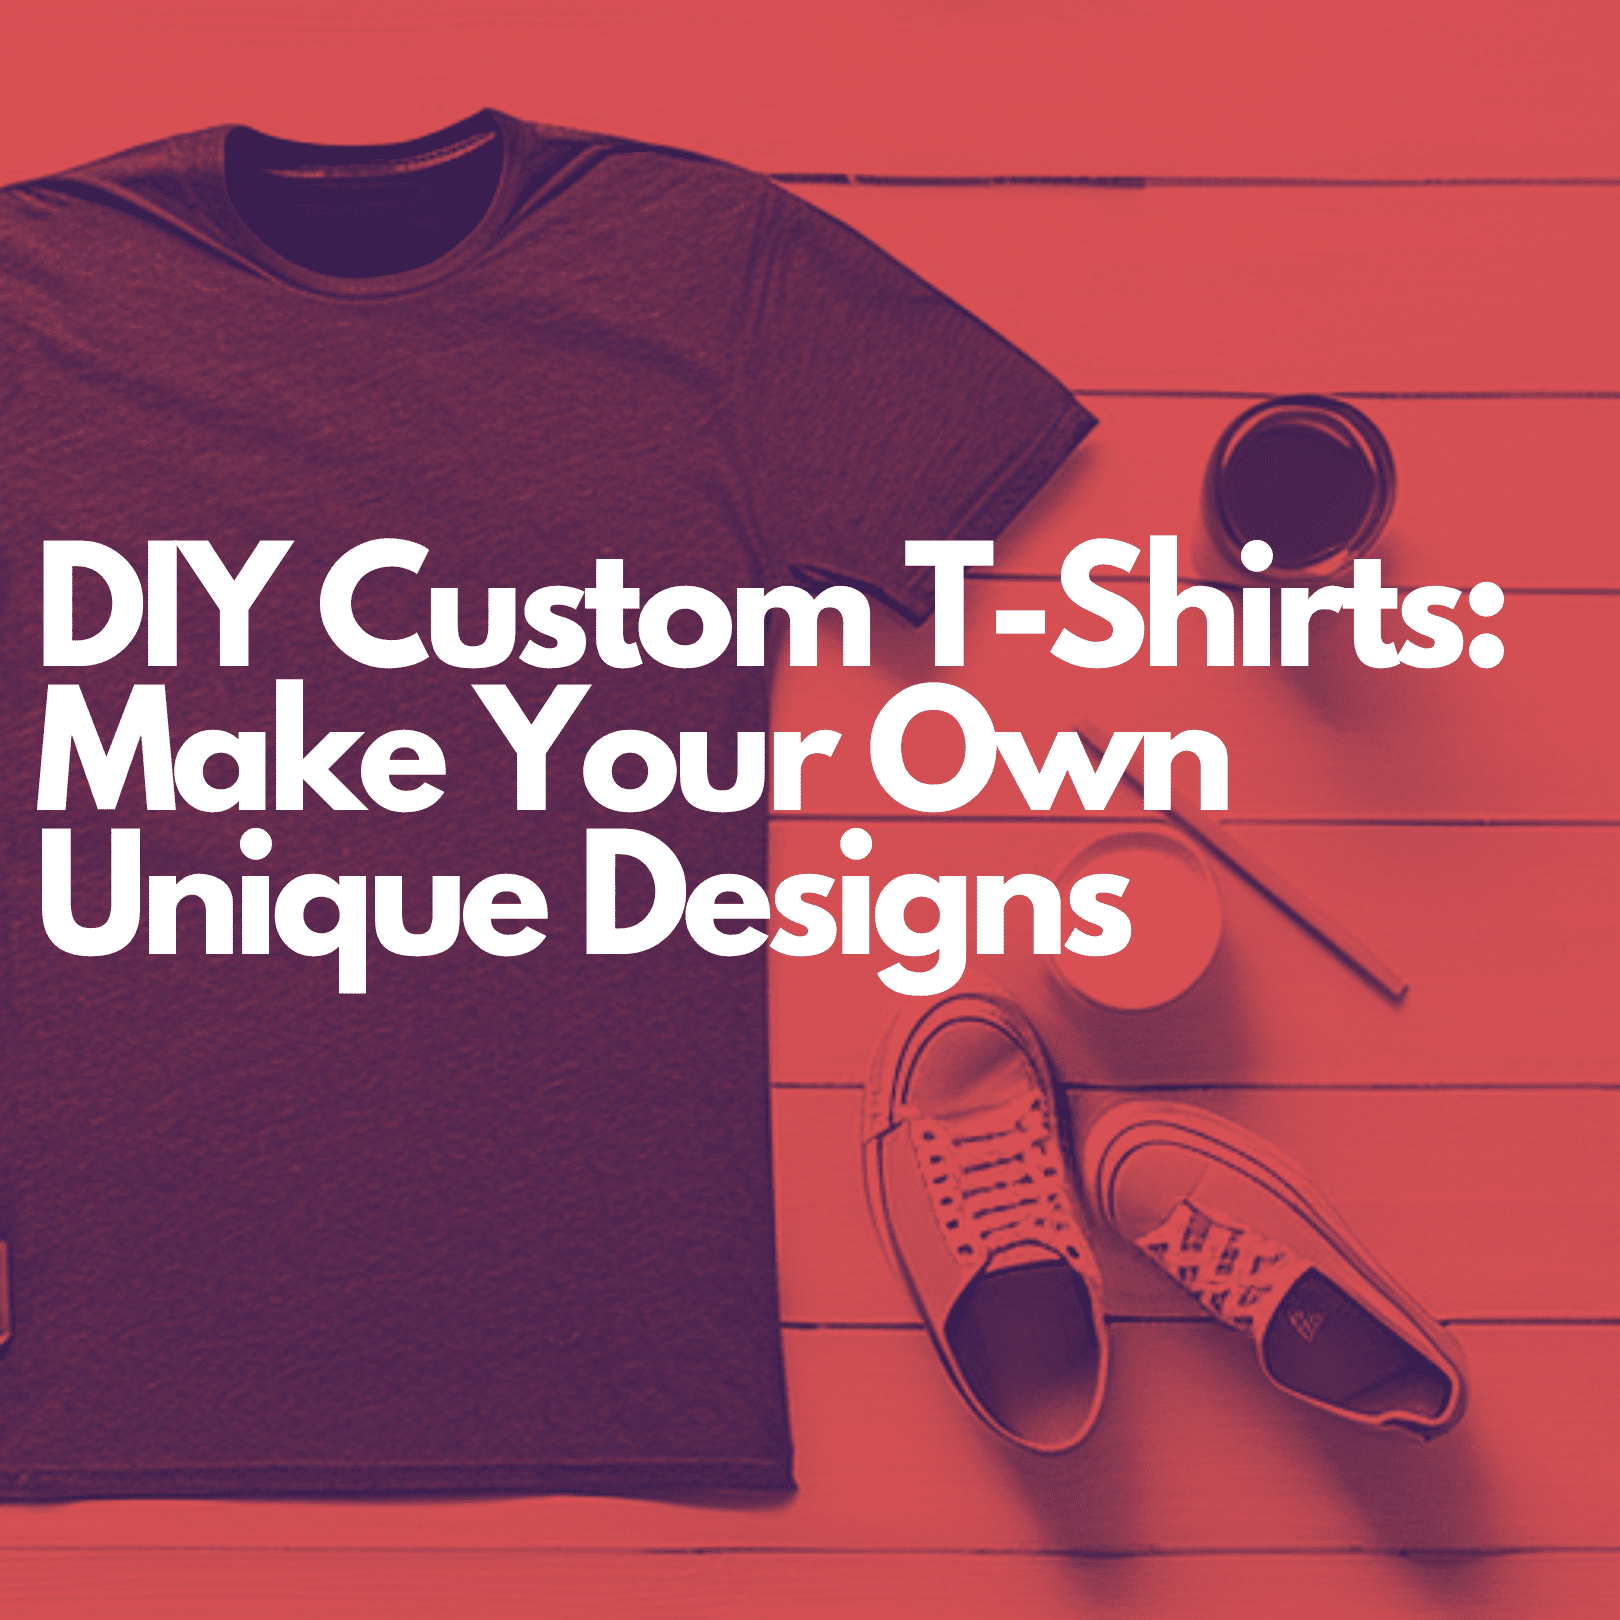 DIY Custom T-Shirts: Make Your Own Unique Designs | WDFA Custom Tees